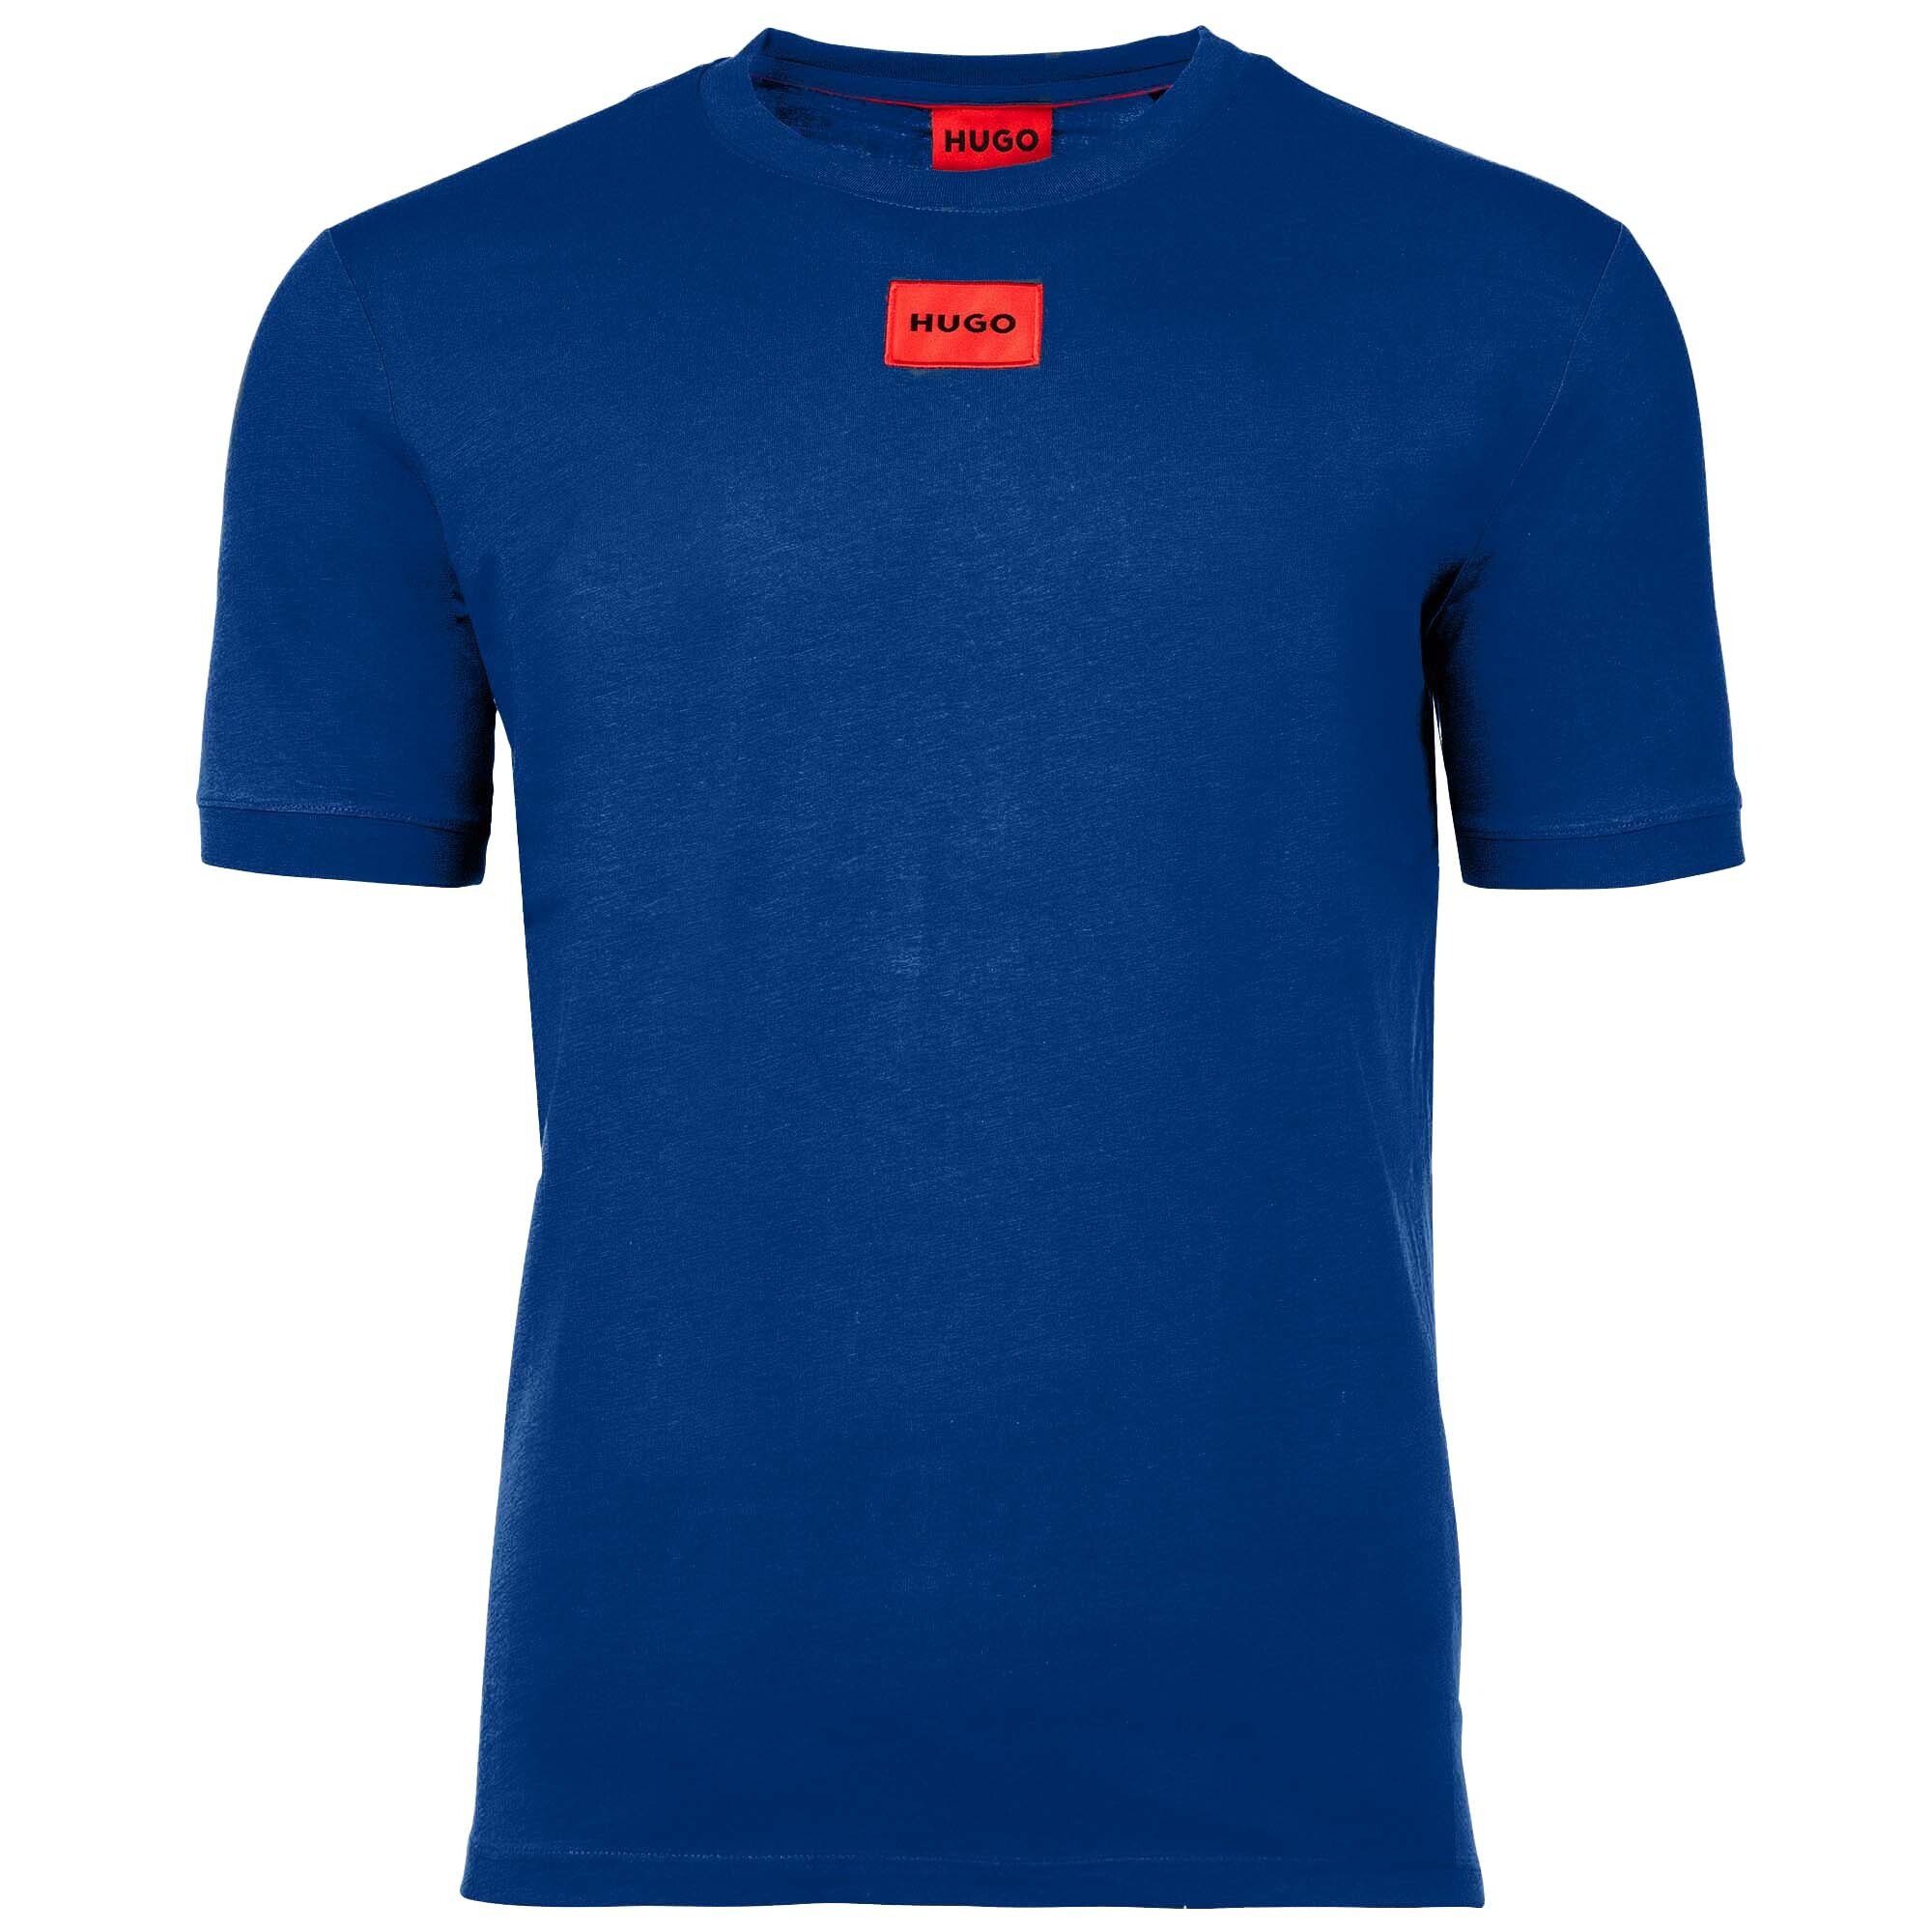 HUGO Herren Blue) T-Shirt Blau - (Medium Diragolino212 Rundhals T-Shirt